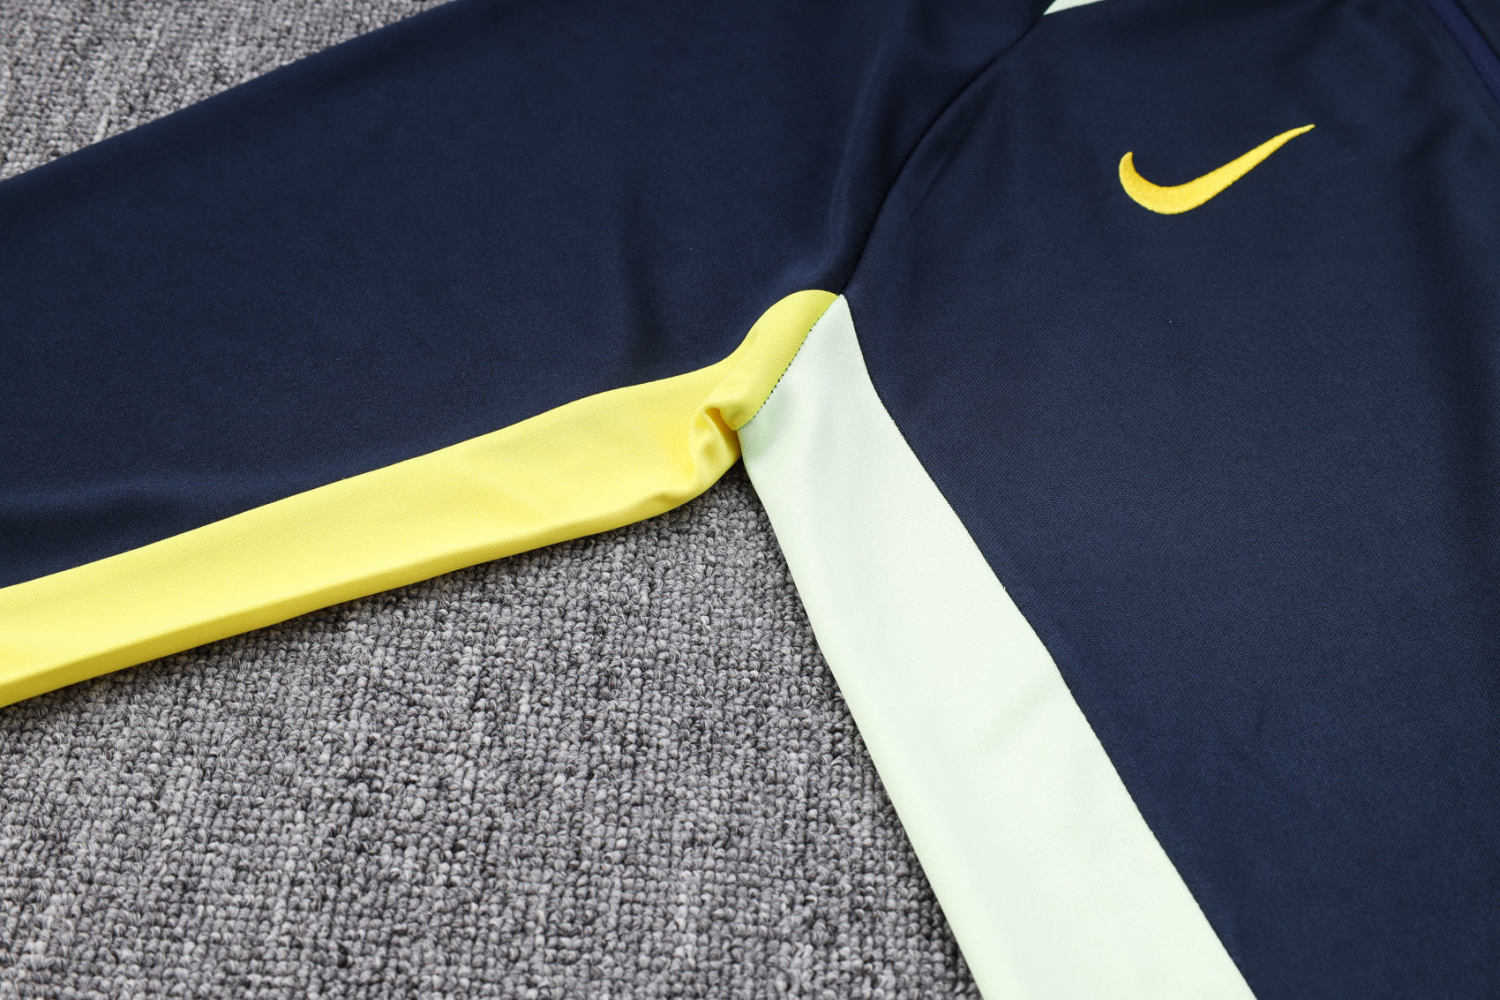 Brazil Soccer Jacket + Pants Replica Royal 2023 Mens